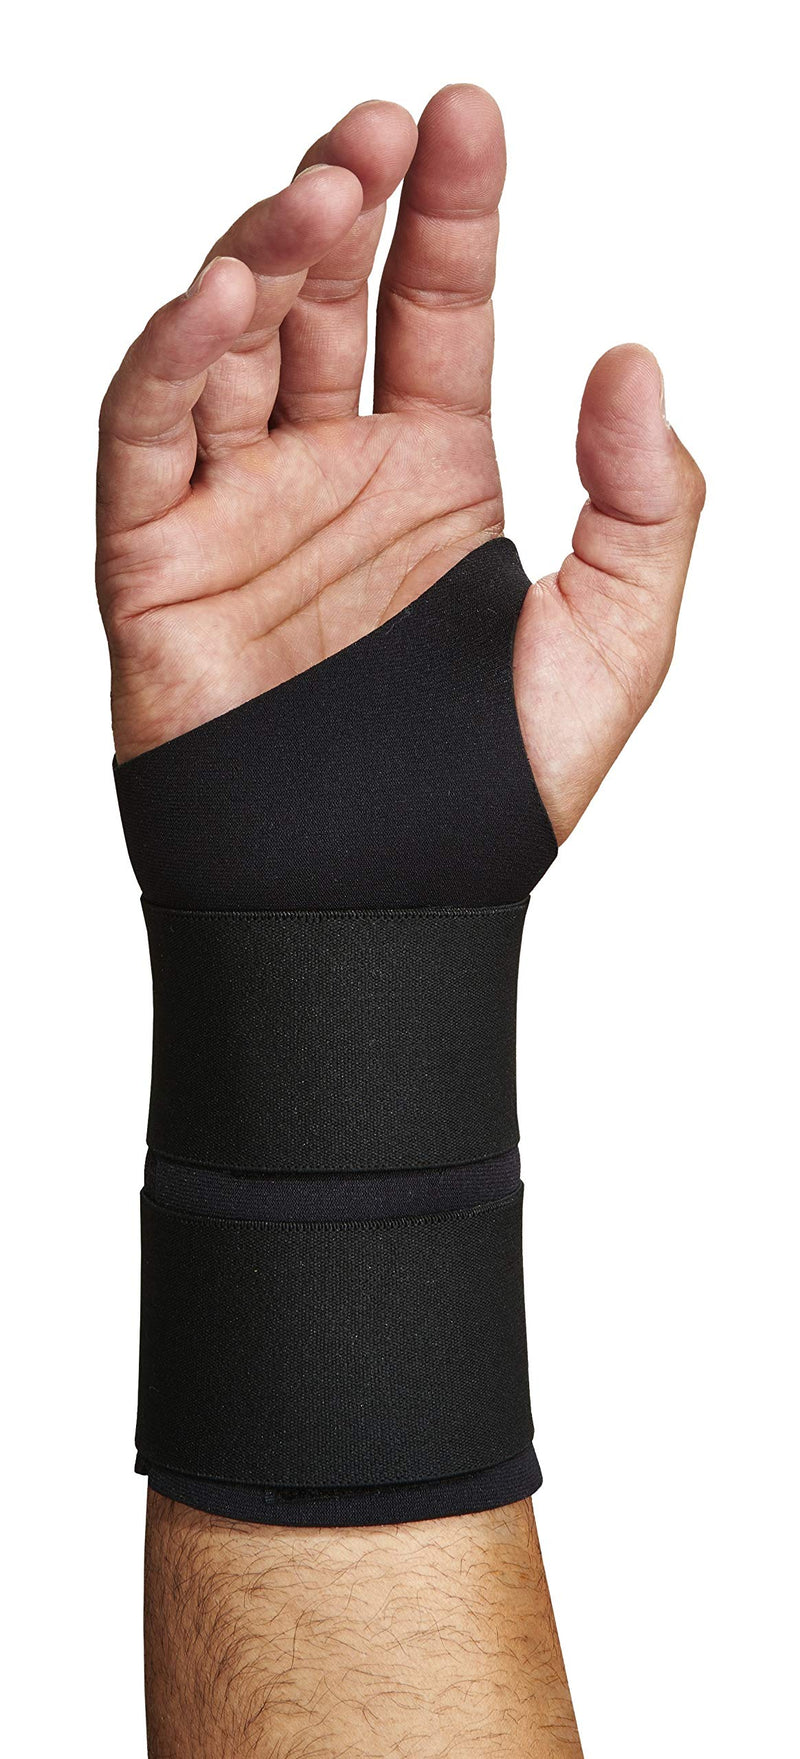 [Australia] - Ergodyne - 16624 ProFlex 675 Ambidextrous Double-Strap Wrist Support, Black, Large 